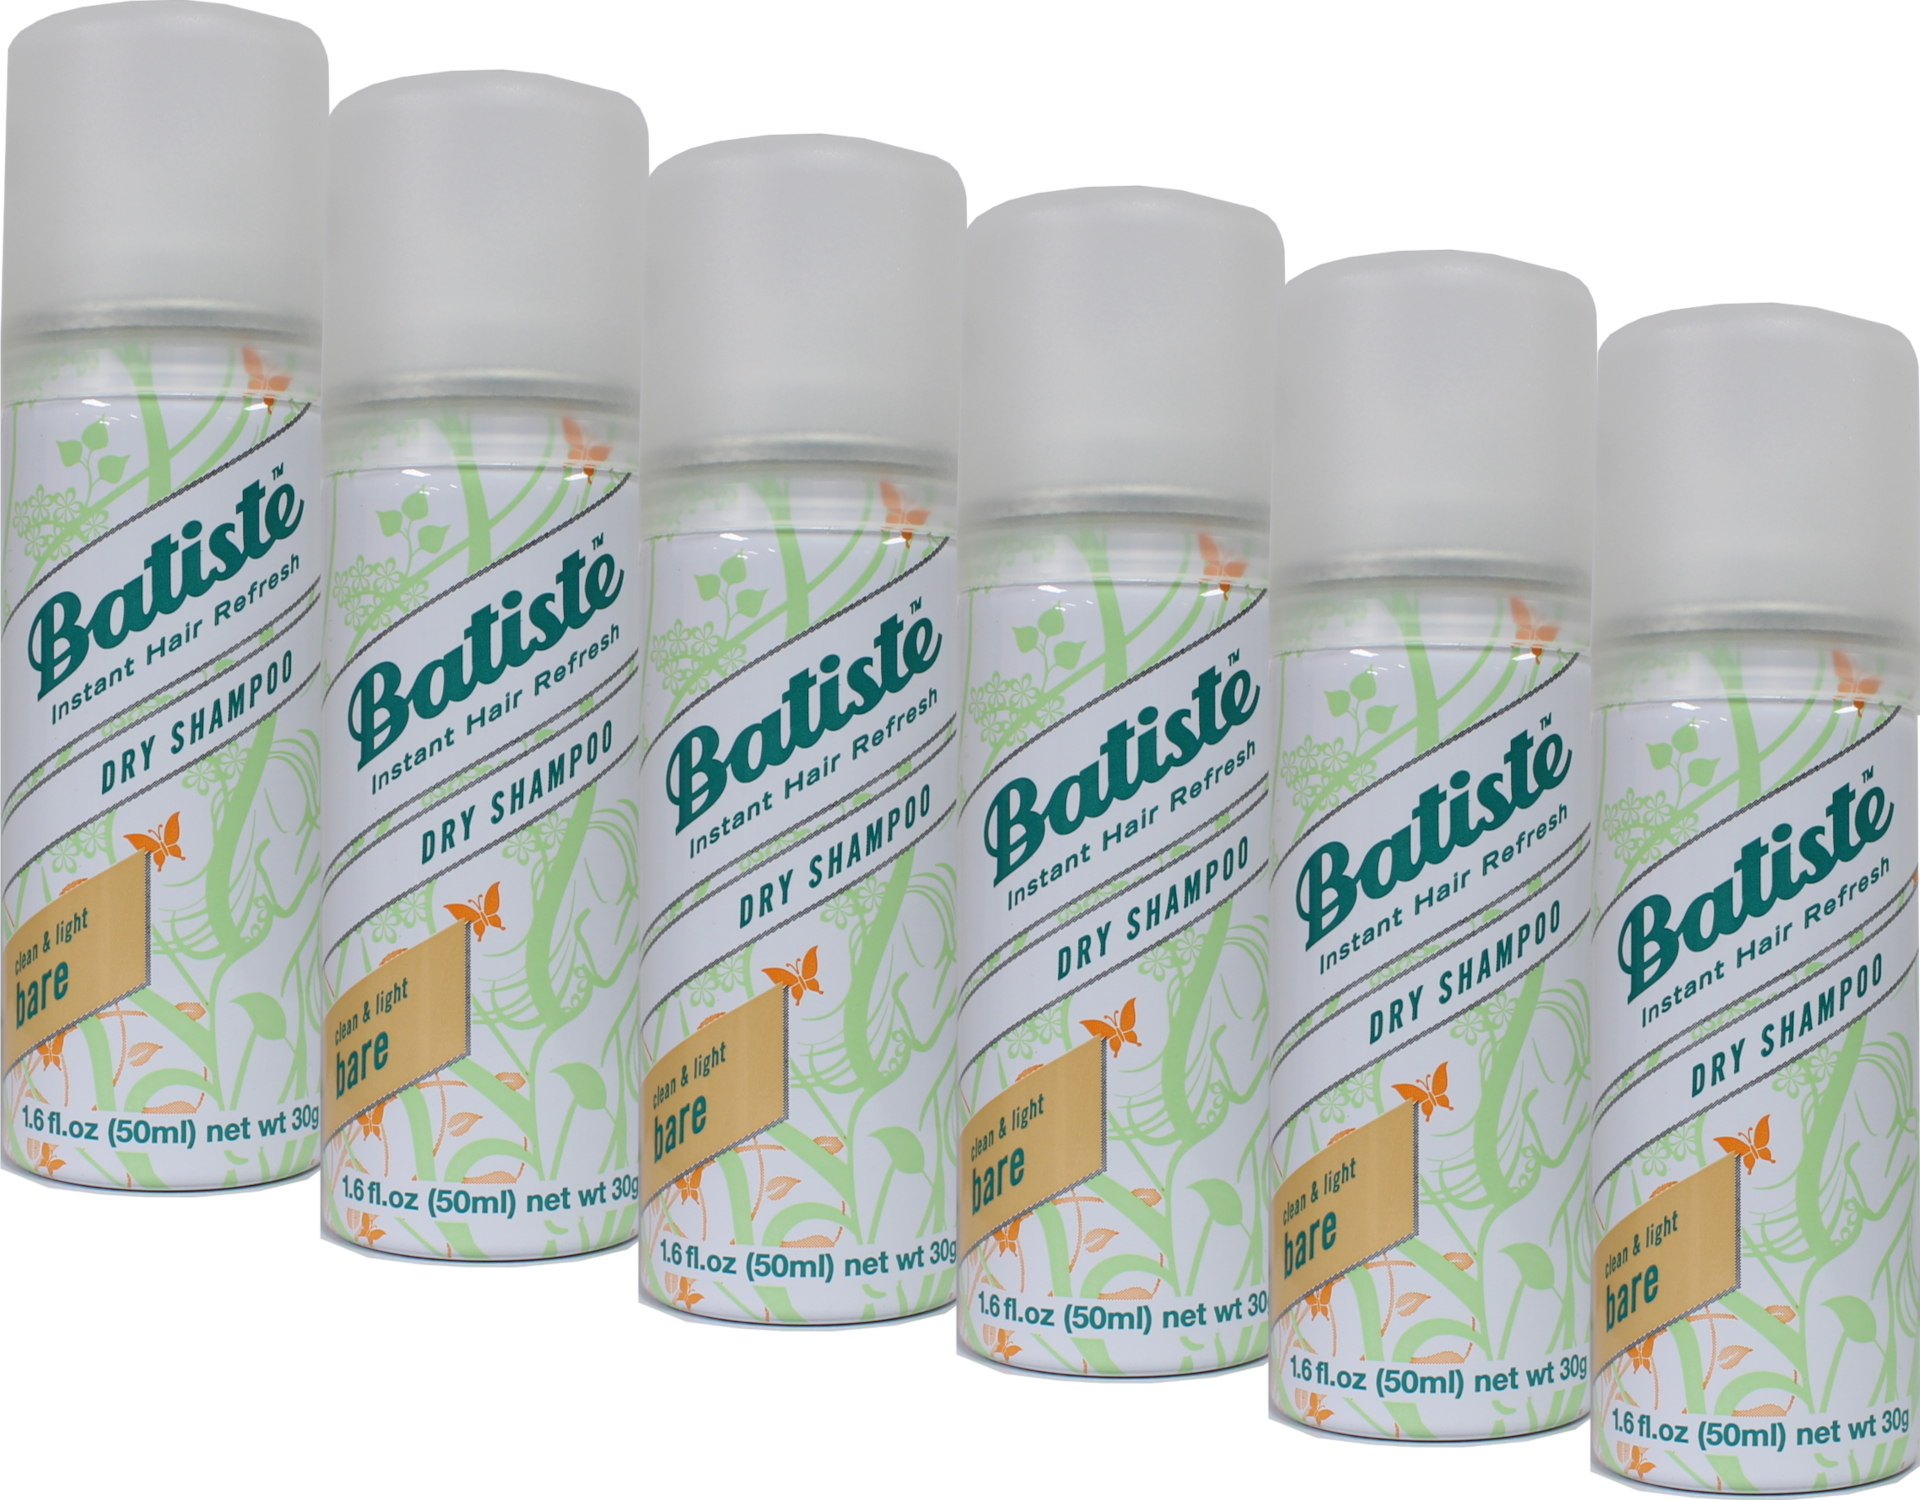 Pack of 6 Batiste Instant Hair Refresh Dry Shampoo Clean Bare Travel Size 1.6 oz | eBay